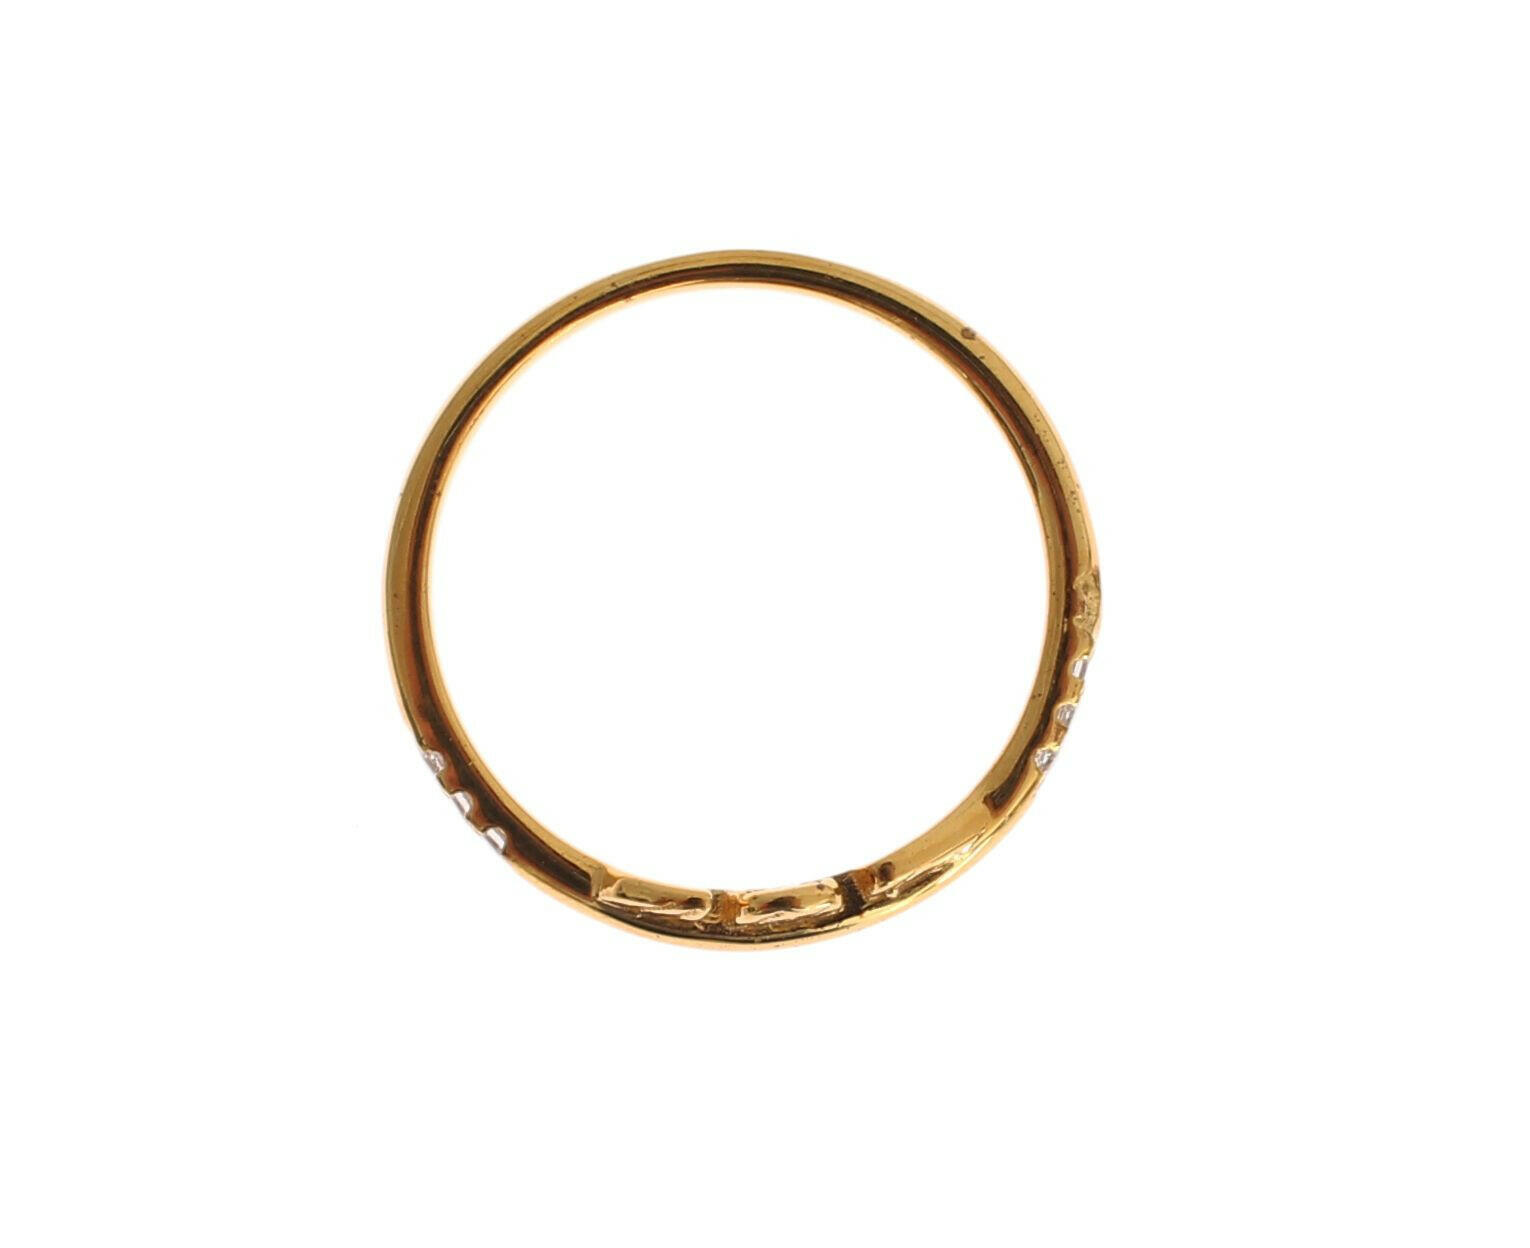 Nialaya Gold Clear CZ 925 Silver Ring - GENUINE AUTHENTIC BRAND LLC  